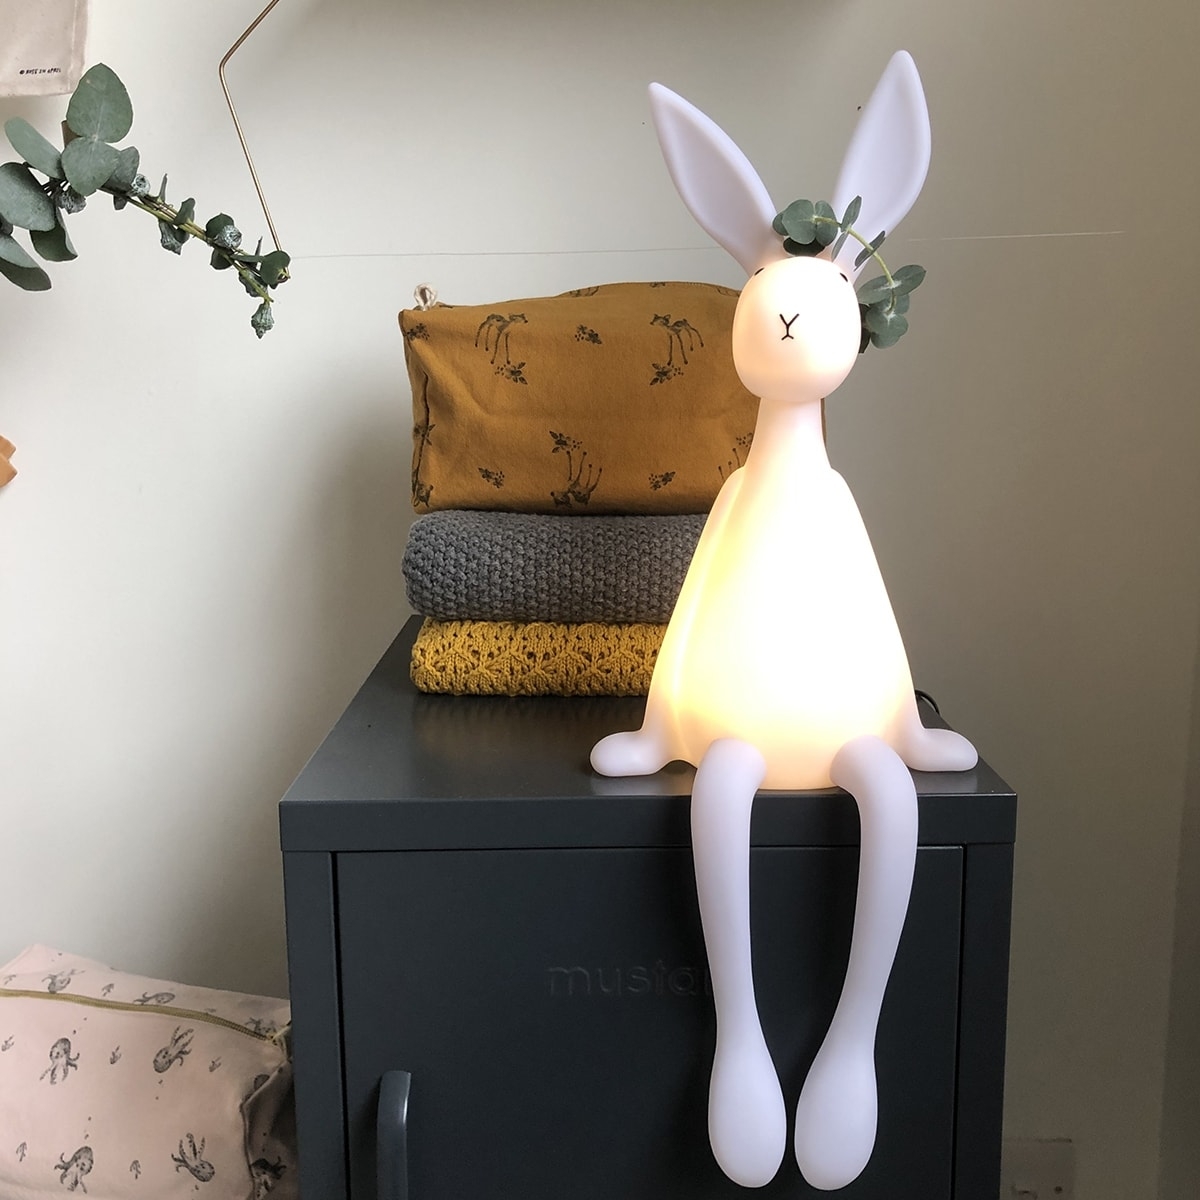 Konijn the Bunny | Rose in April Dreumes